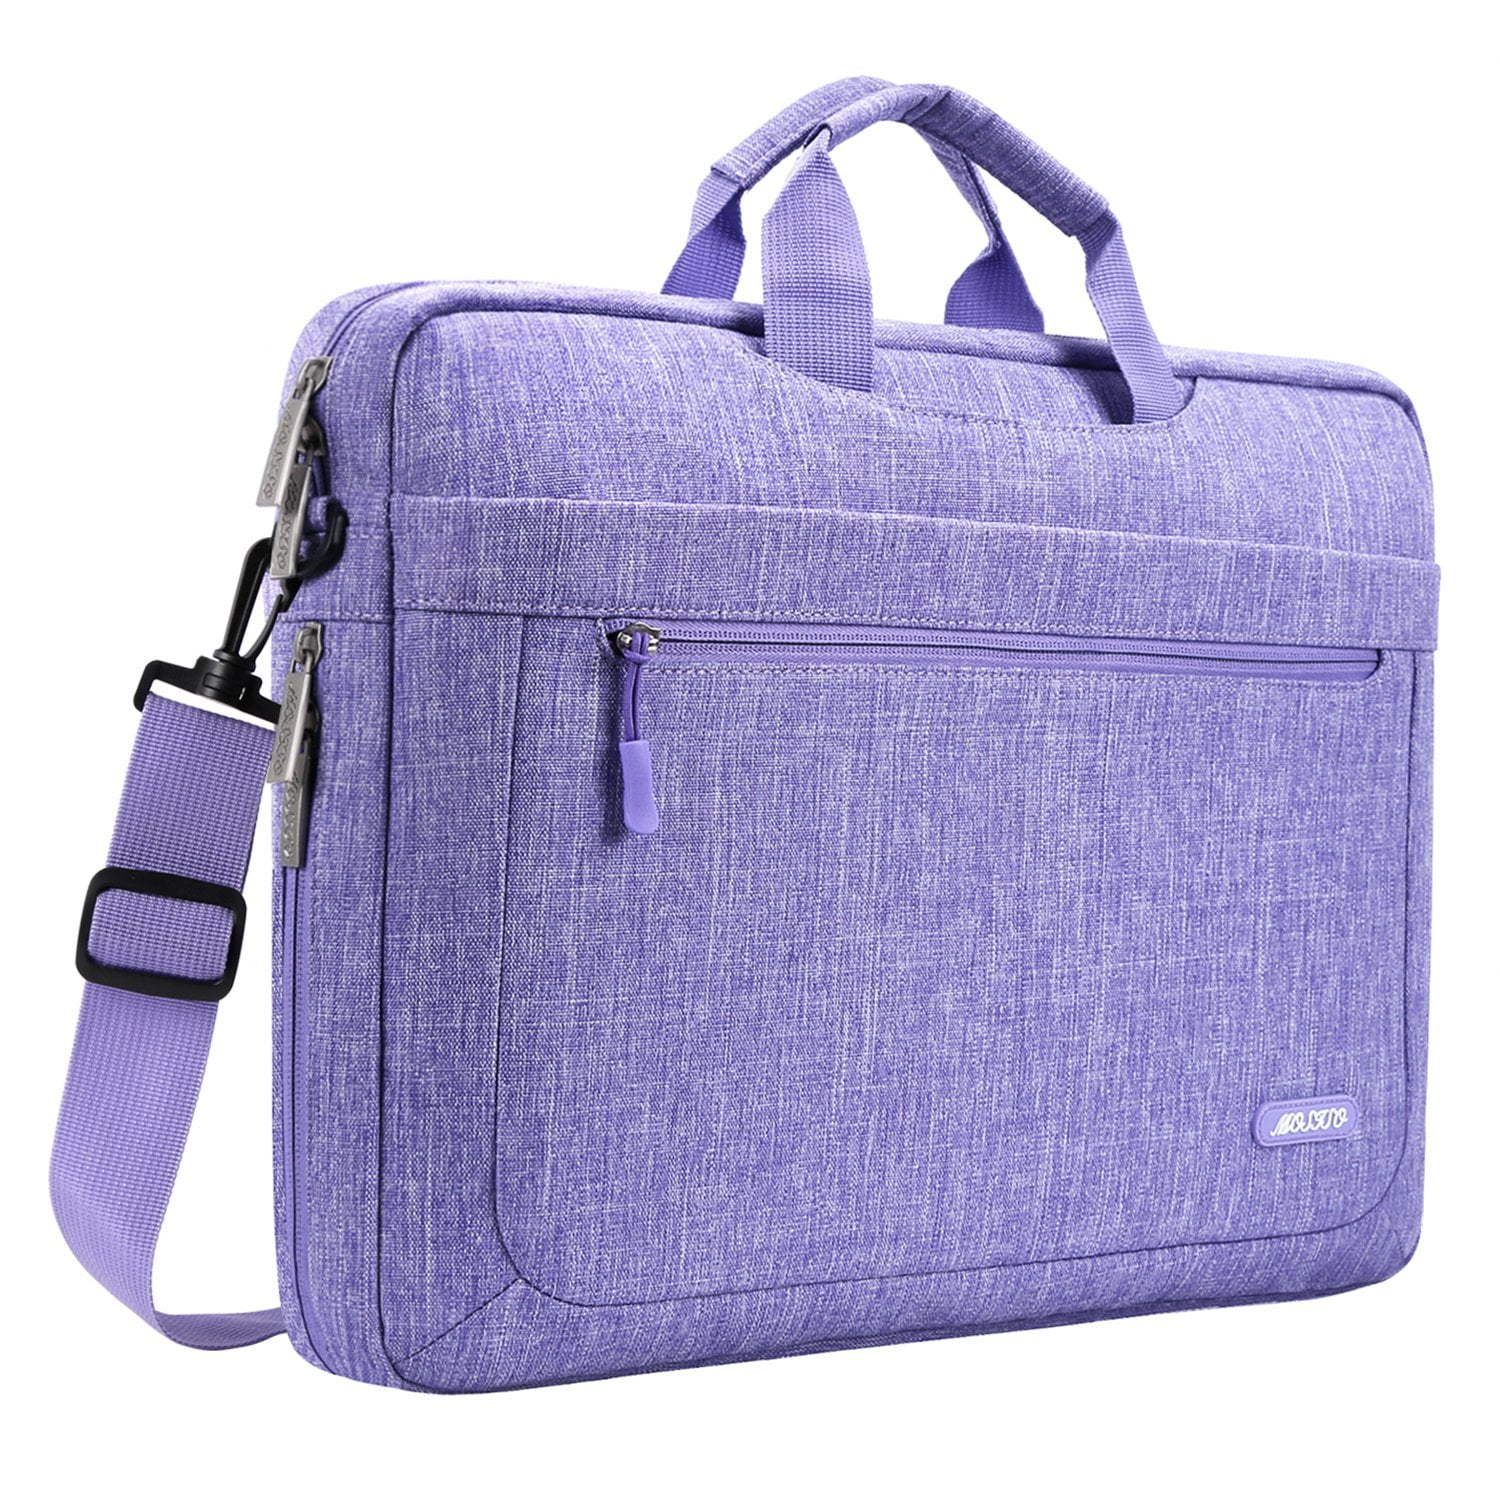 imobaby Paw Footprints Laptop Messenger Shoulder Bag Notebook Sleeve Carrying Briefcase Handbag 15-15.4 inches